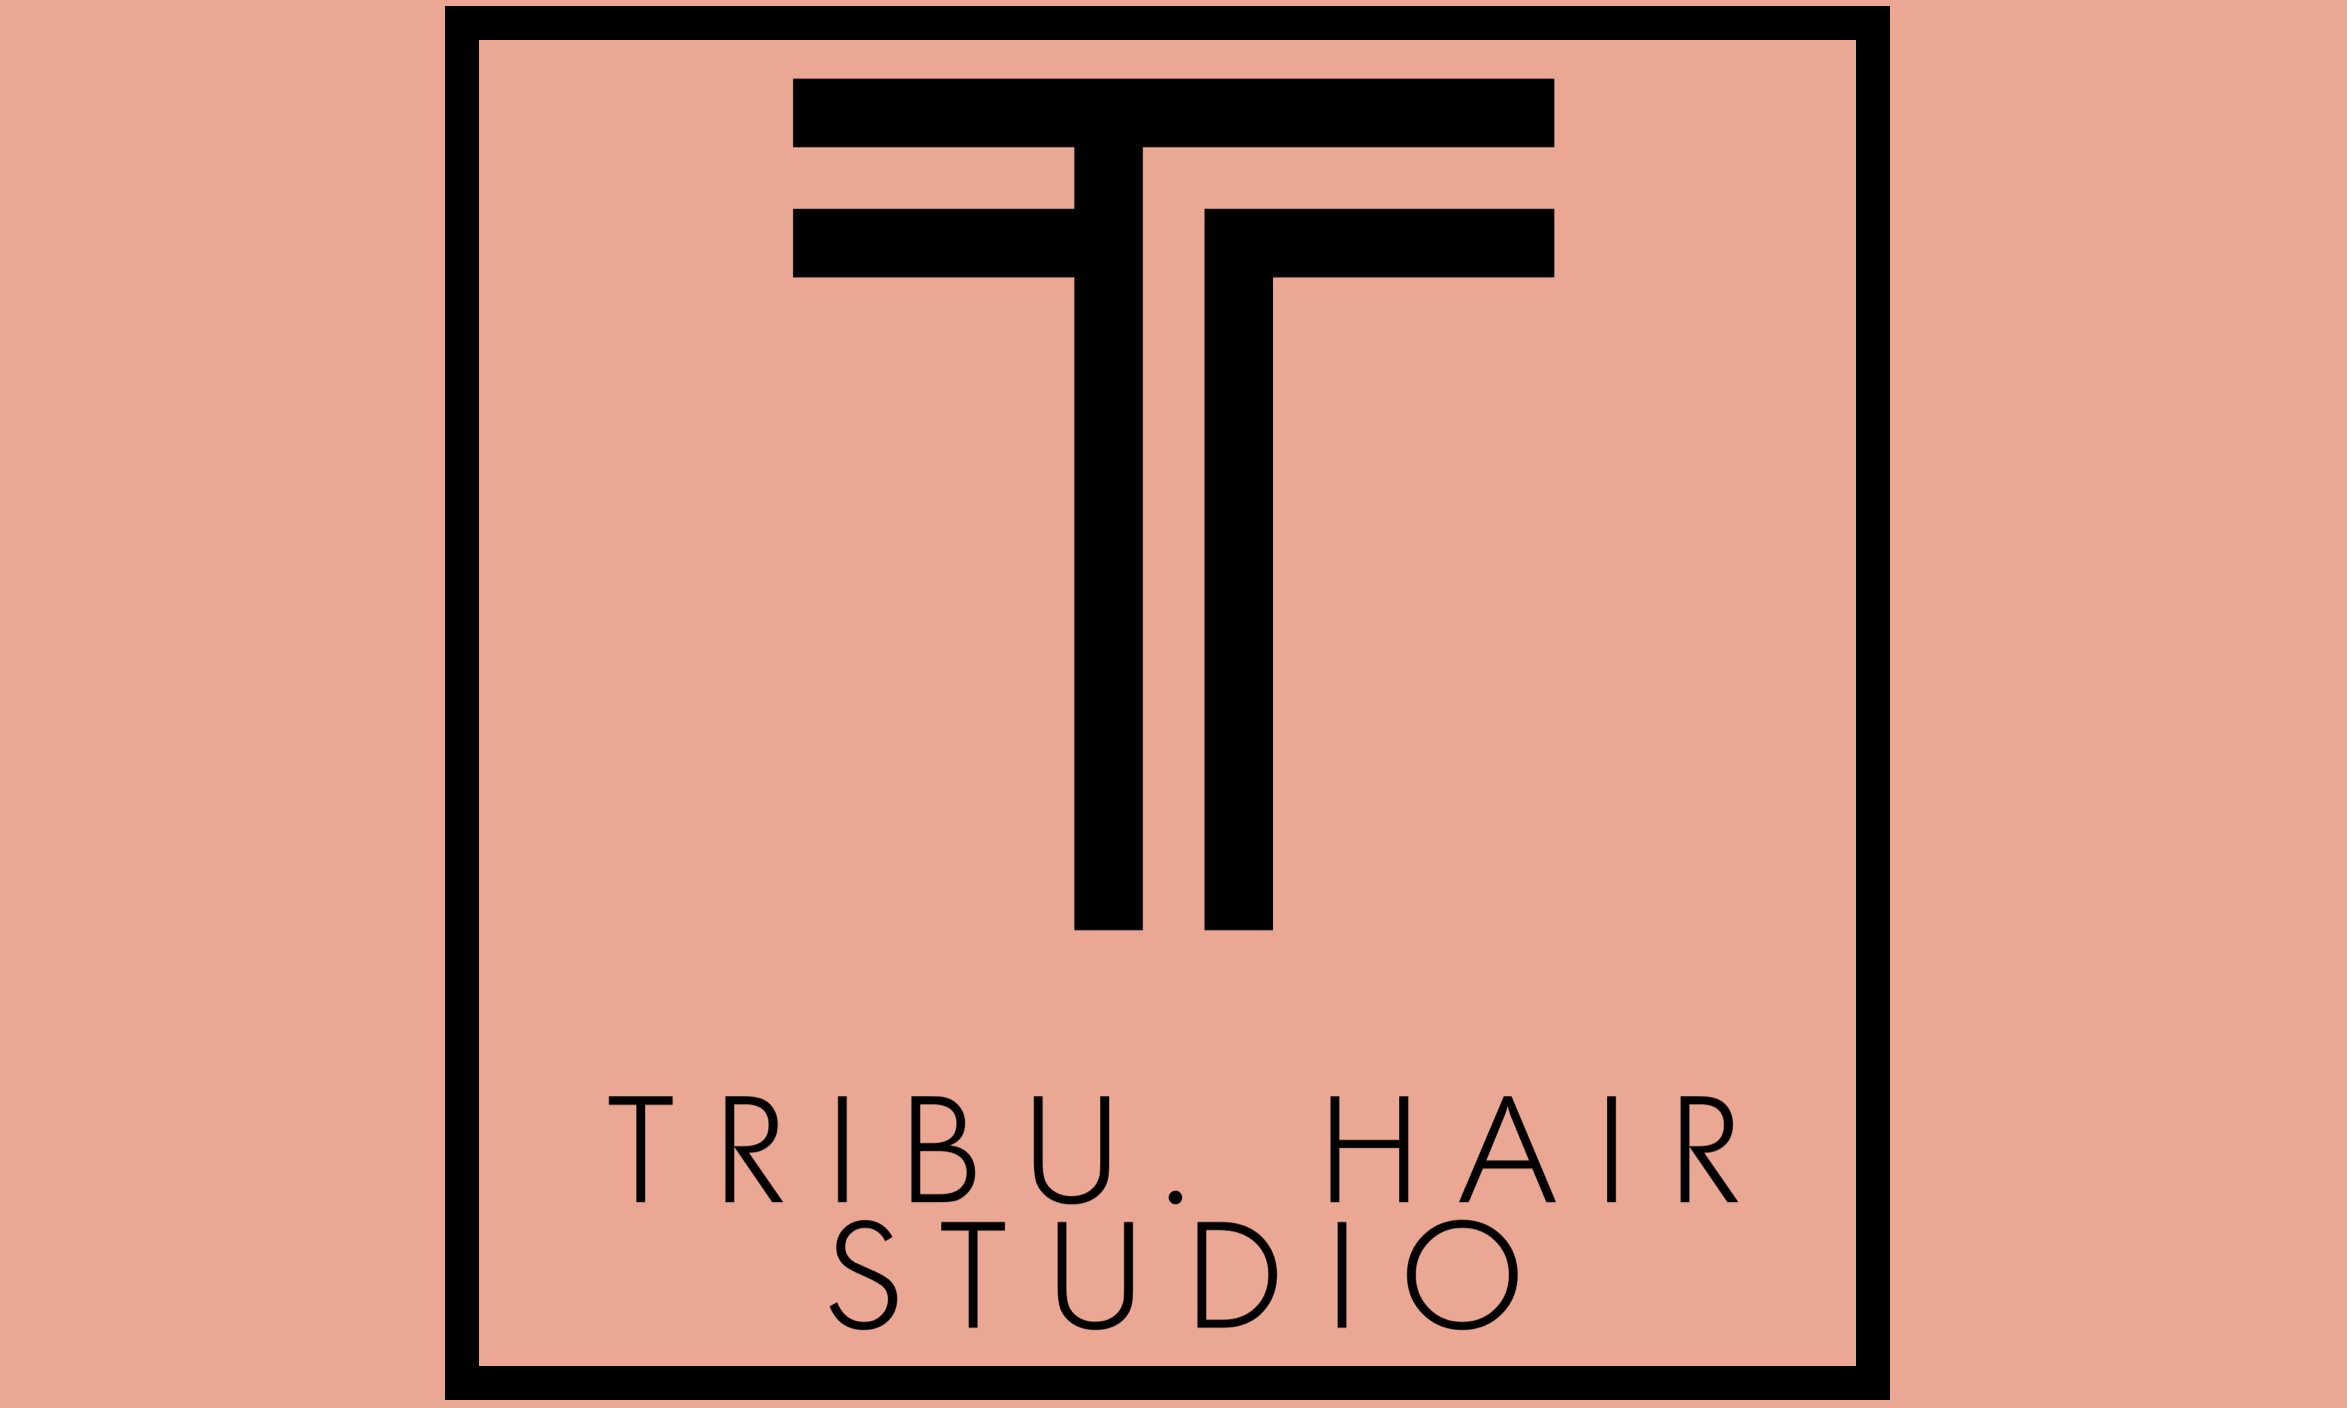 Tribu Hair Studio